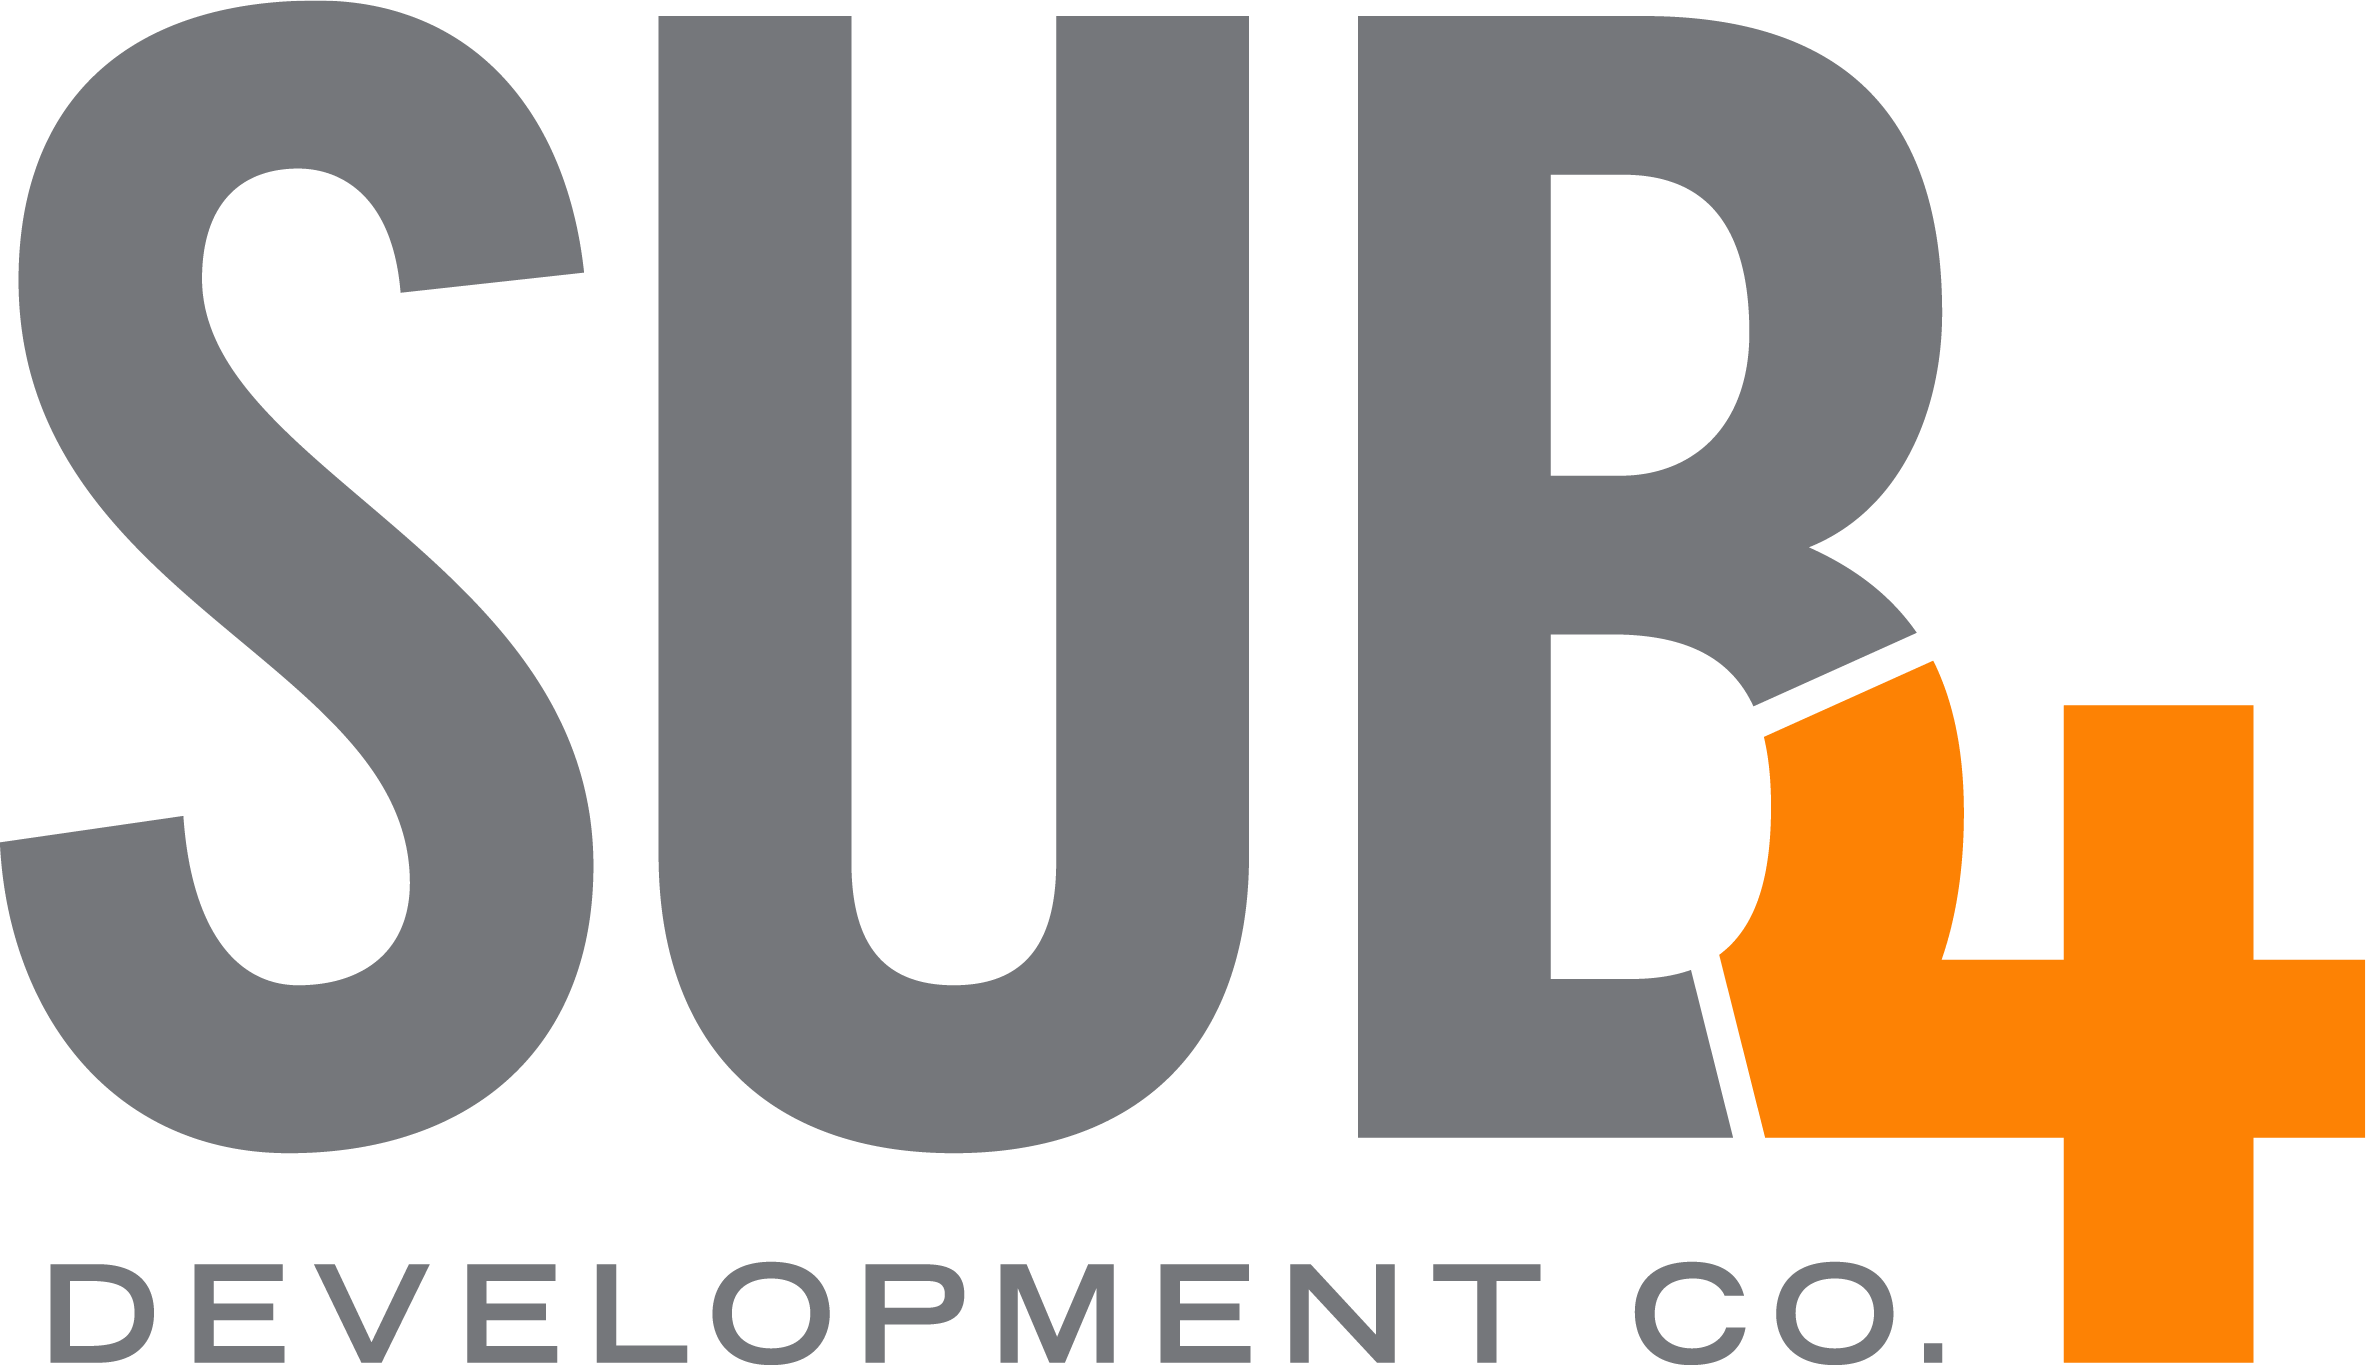 Sub4 Development Company - Branding